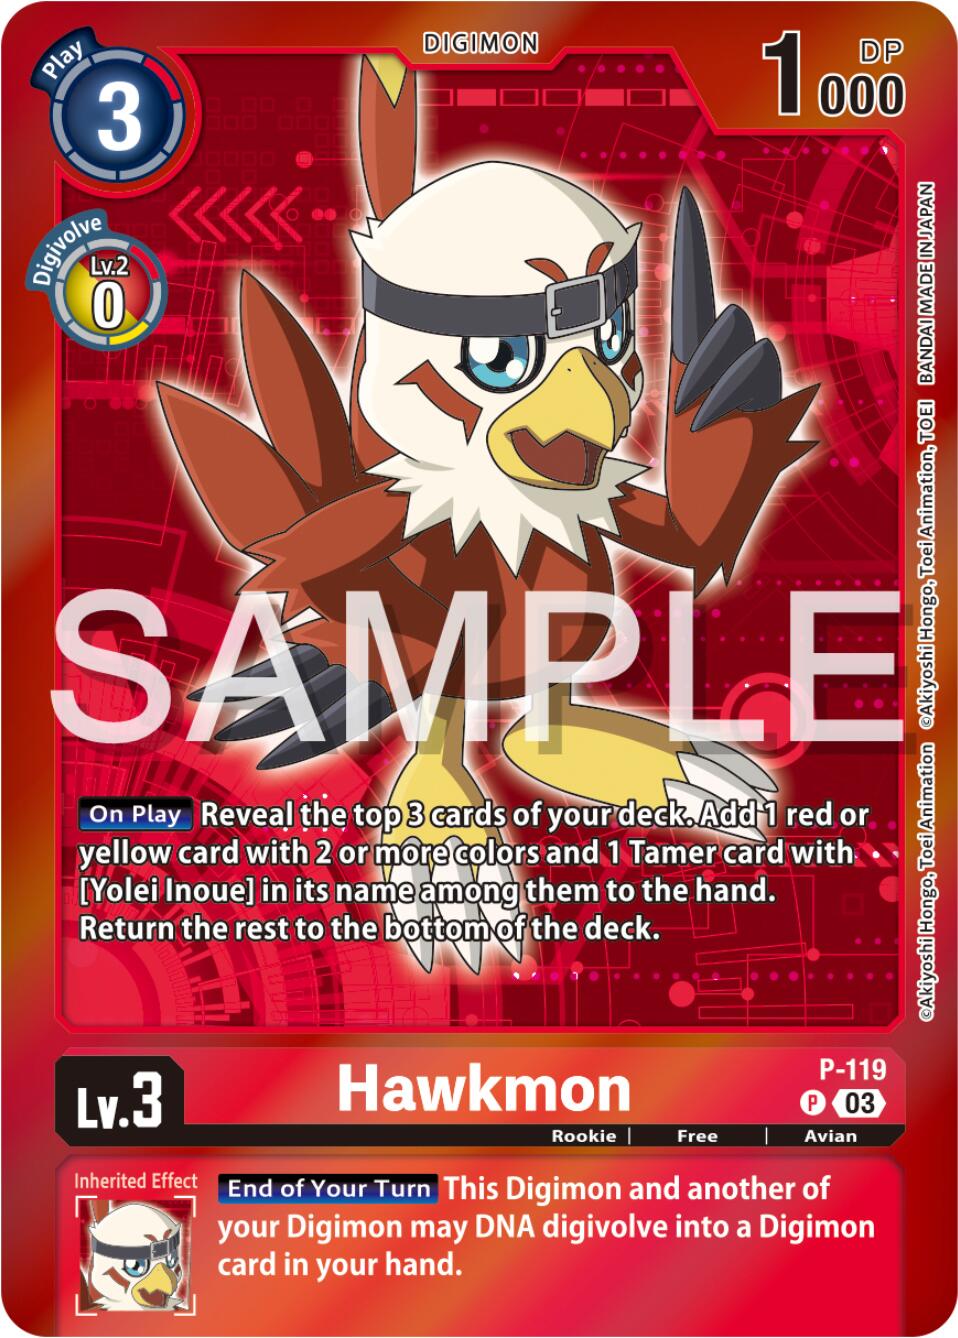 Hawkmon [P-119] - P-119 (Digimon Adventure Box 2024) [Promotional Cards] | Devastation Store